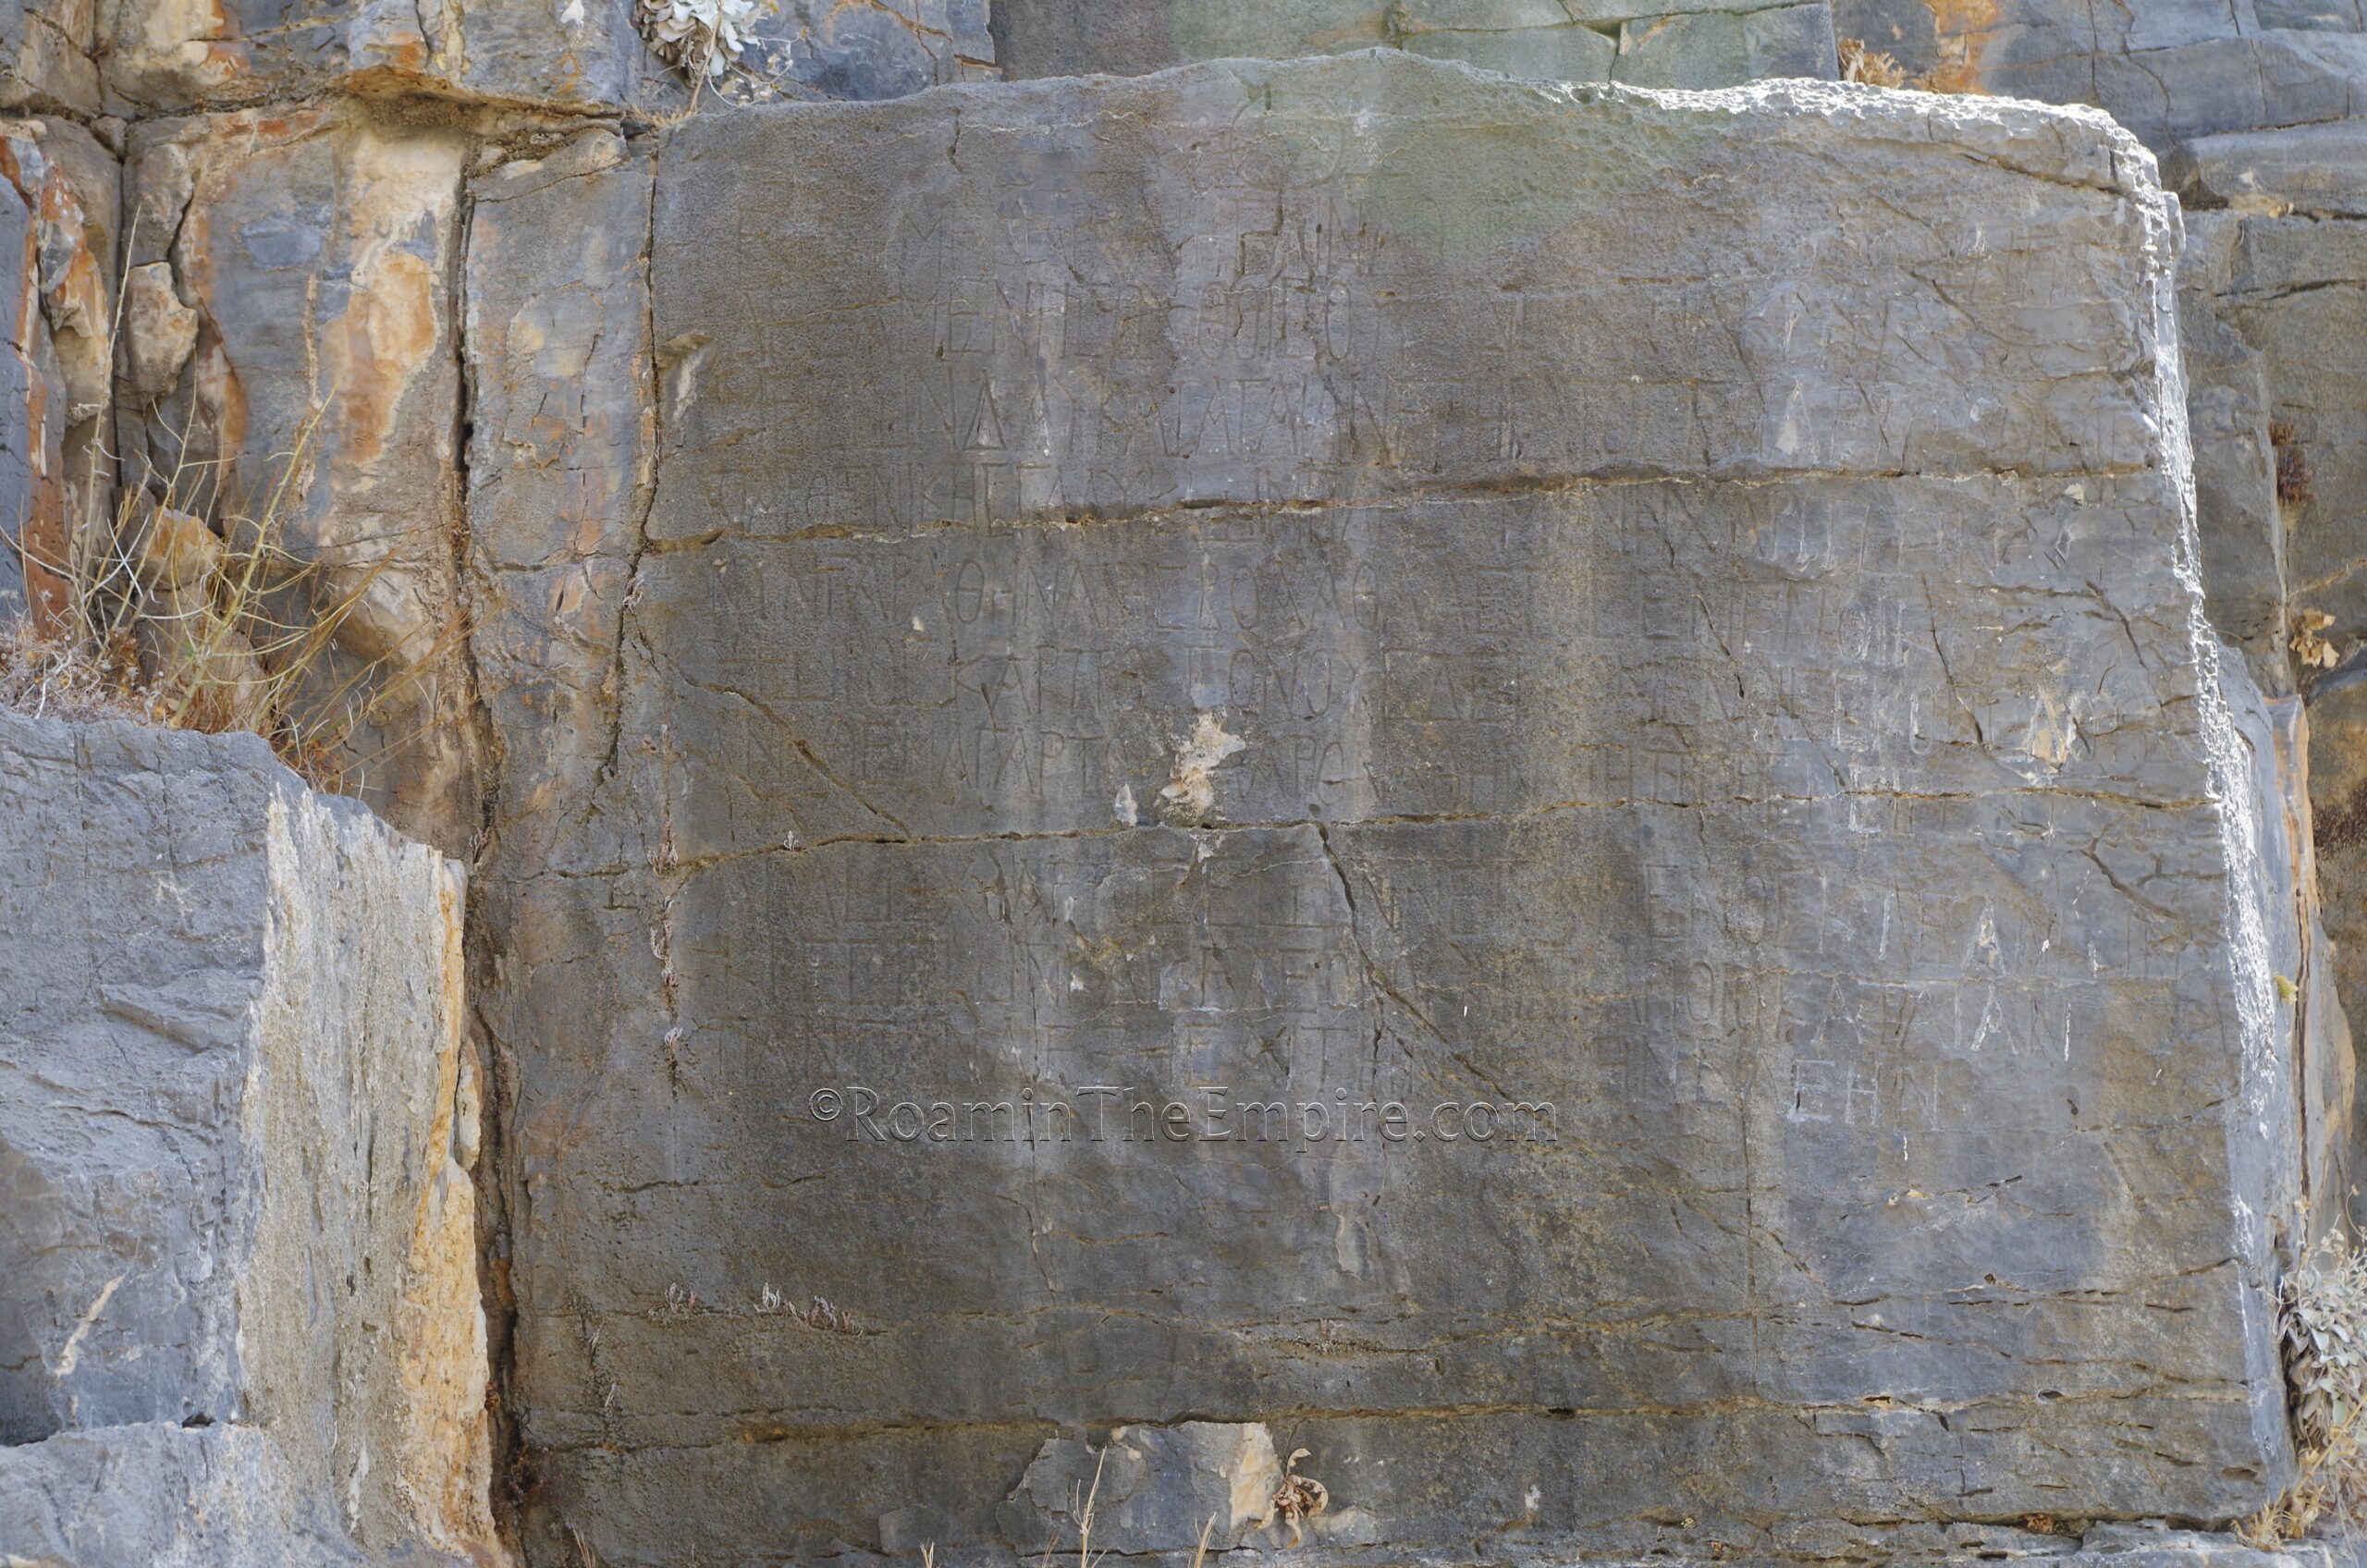 Rock-cut inscription below the entry of the acropolis.